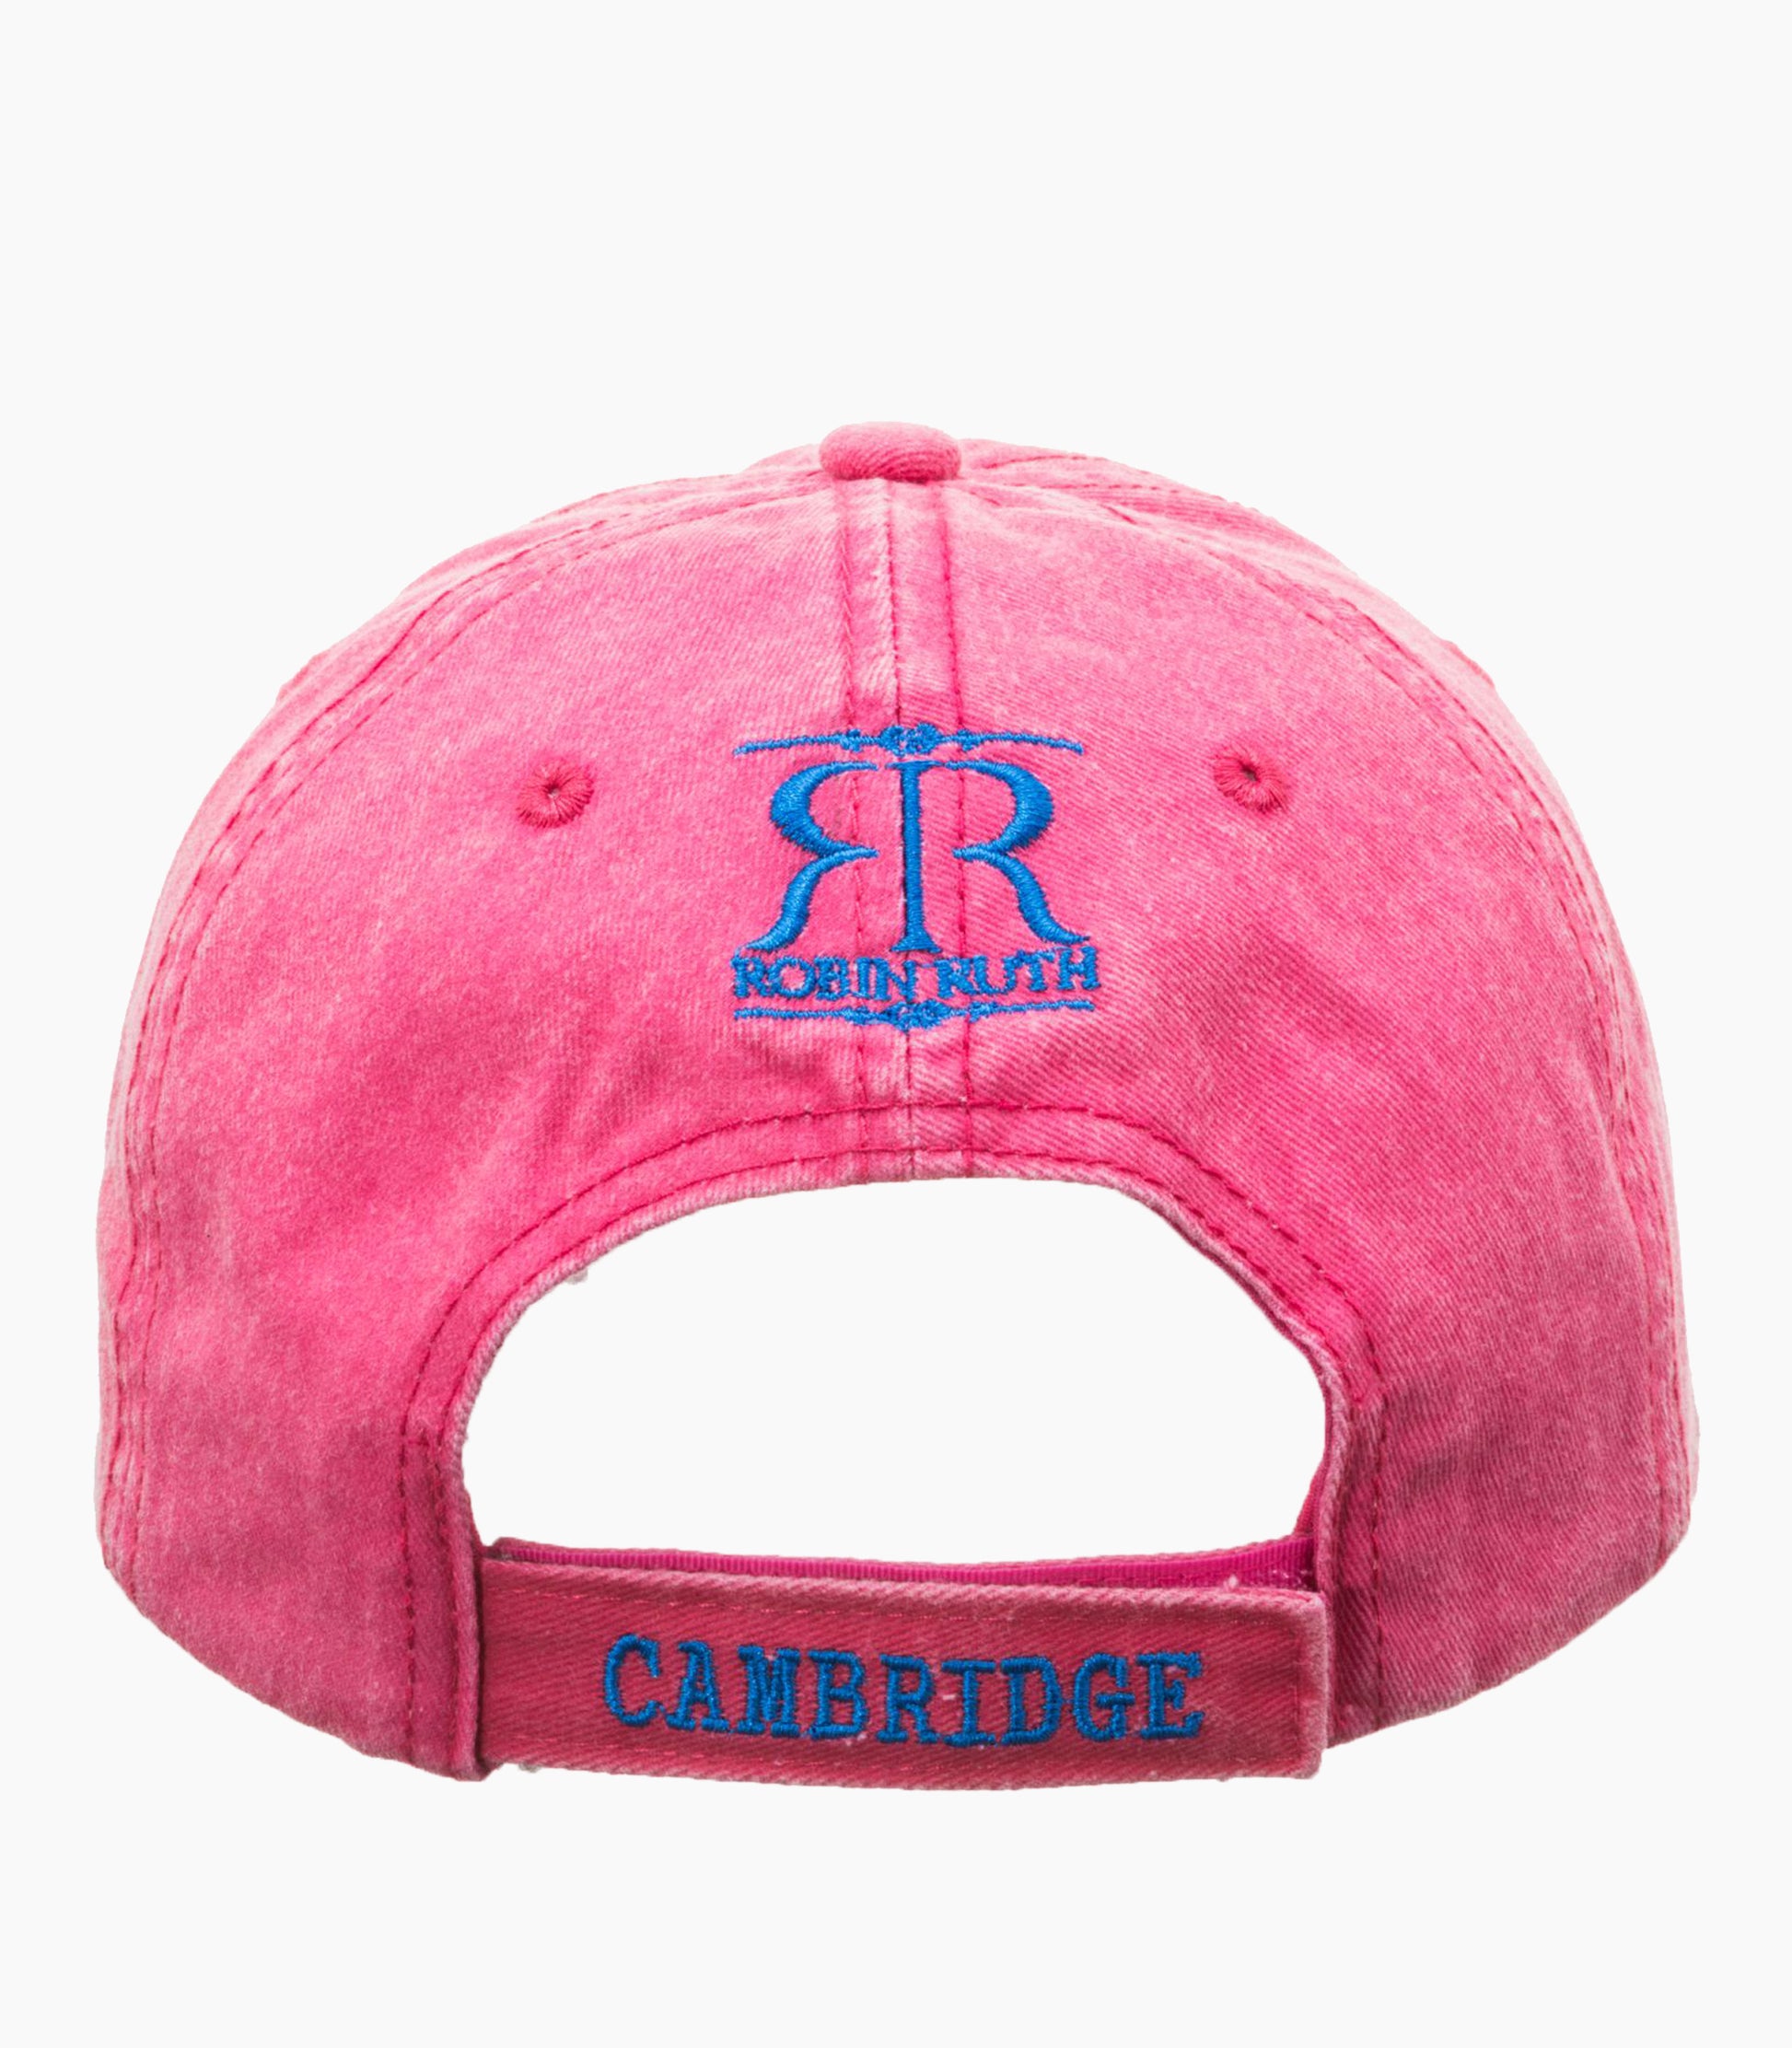 Cambridge Cap - Robin Ruth